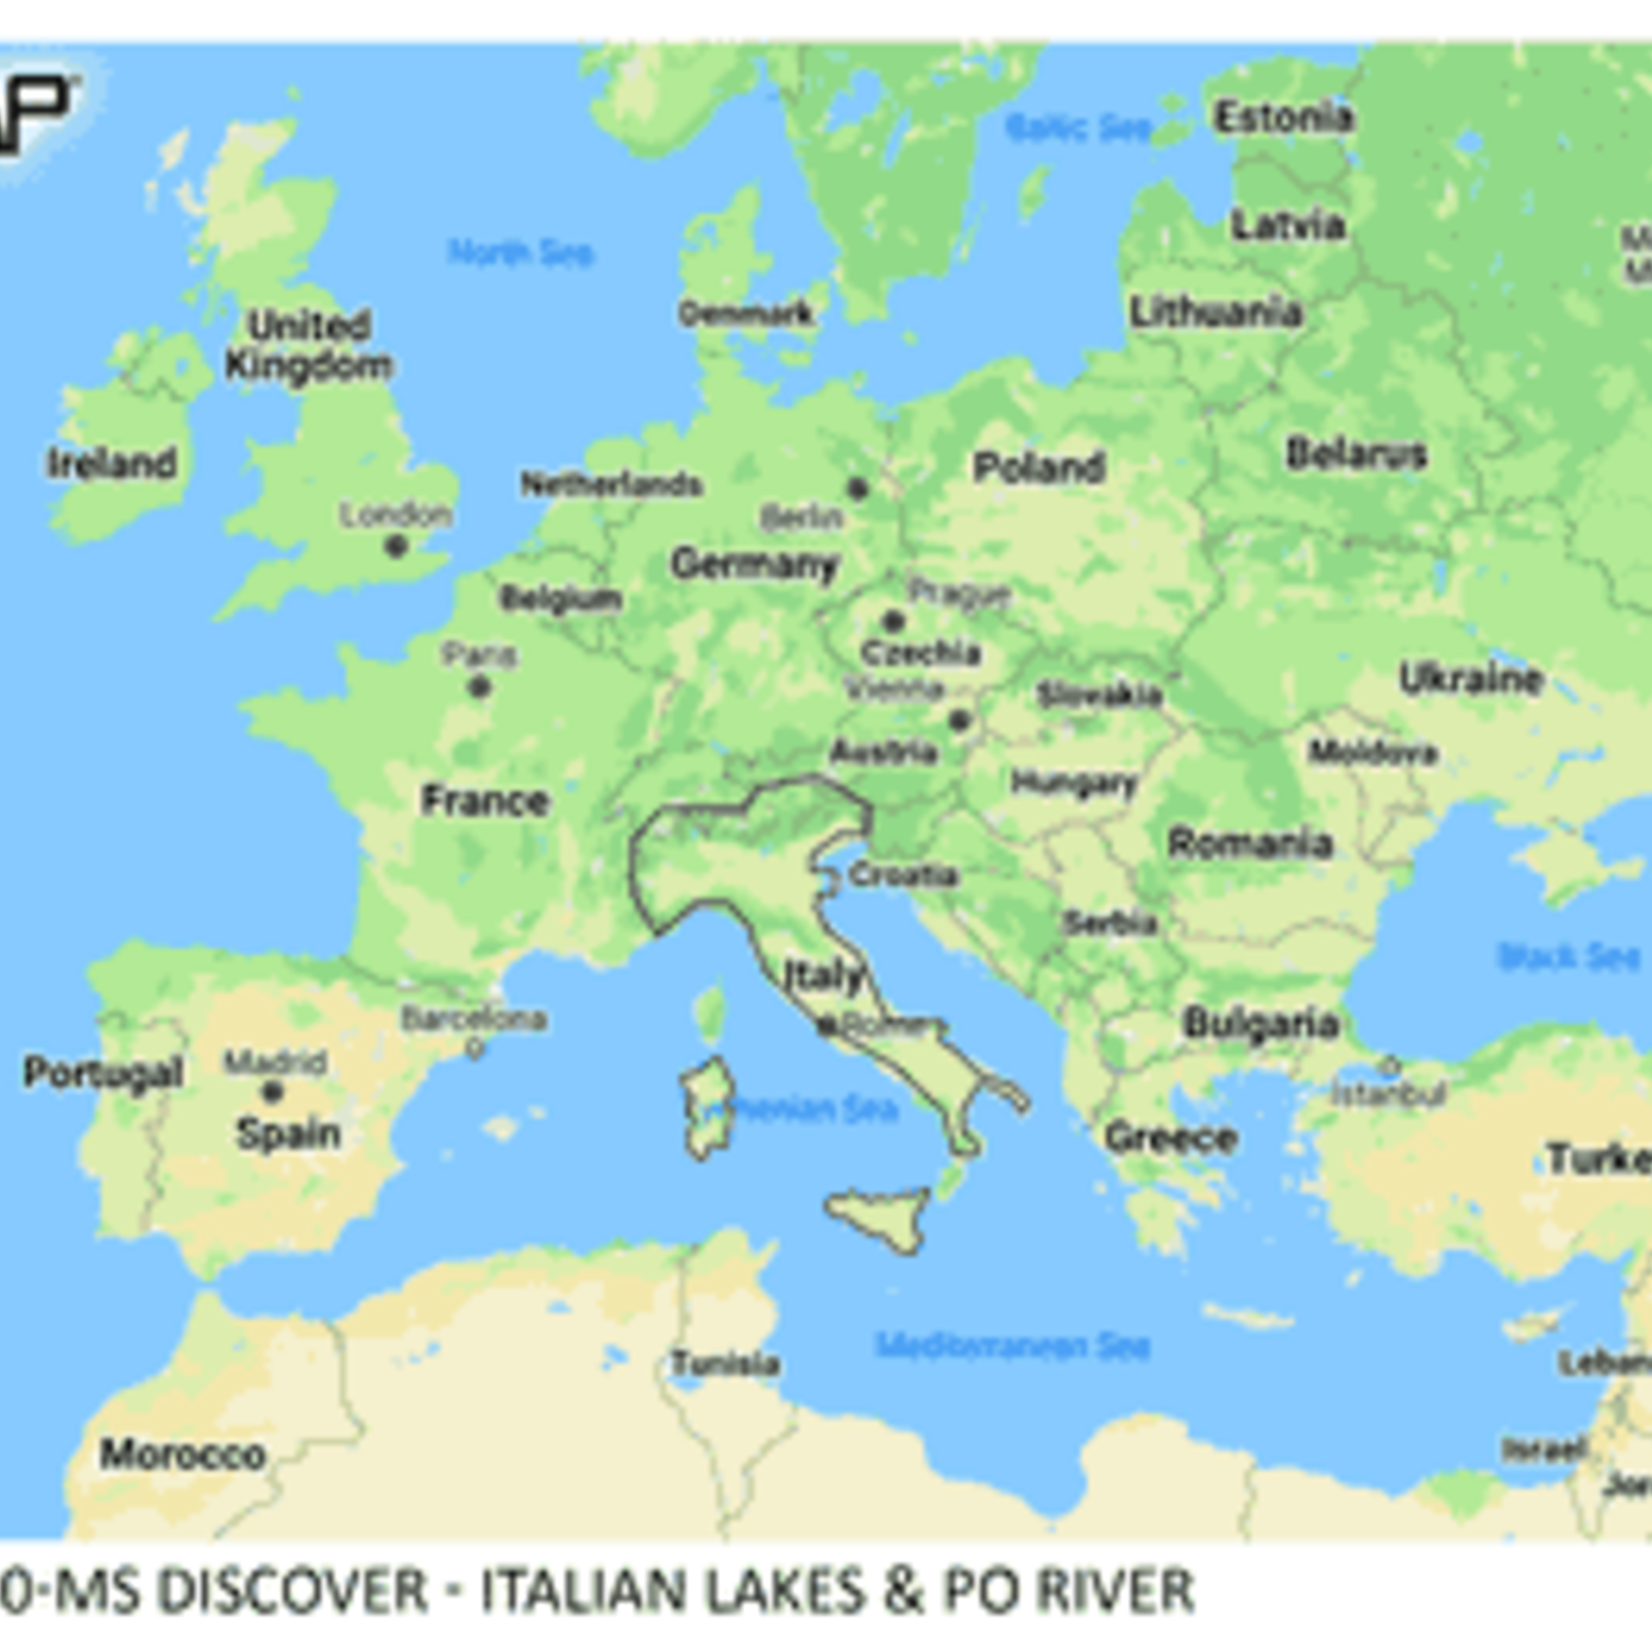 C-MAP DISCOVER - Italian Lakes & Po River